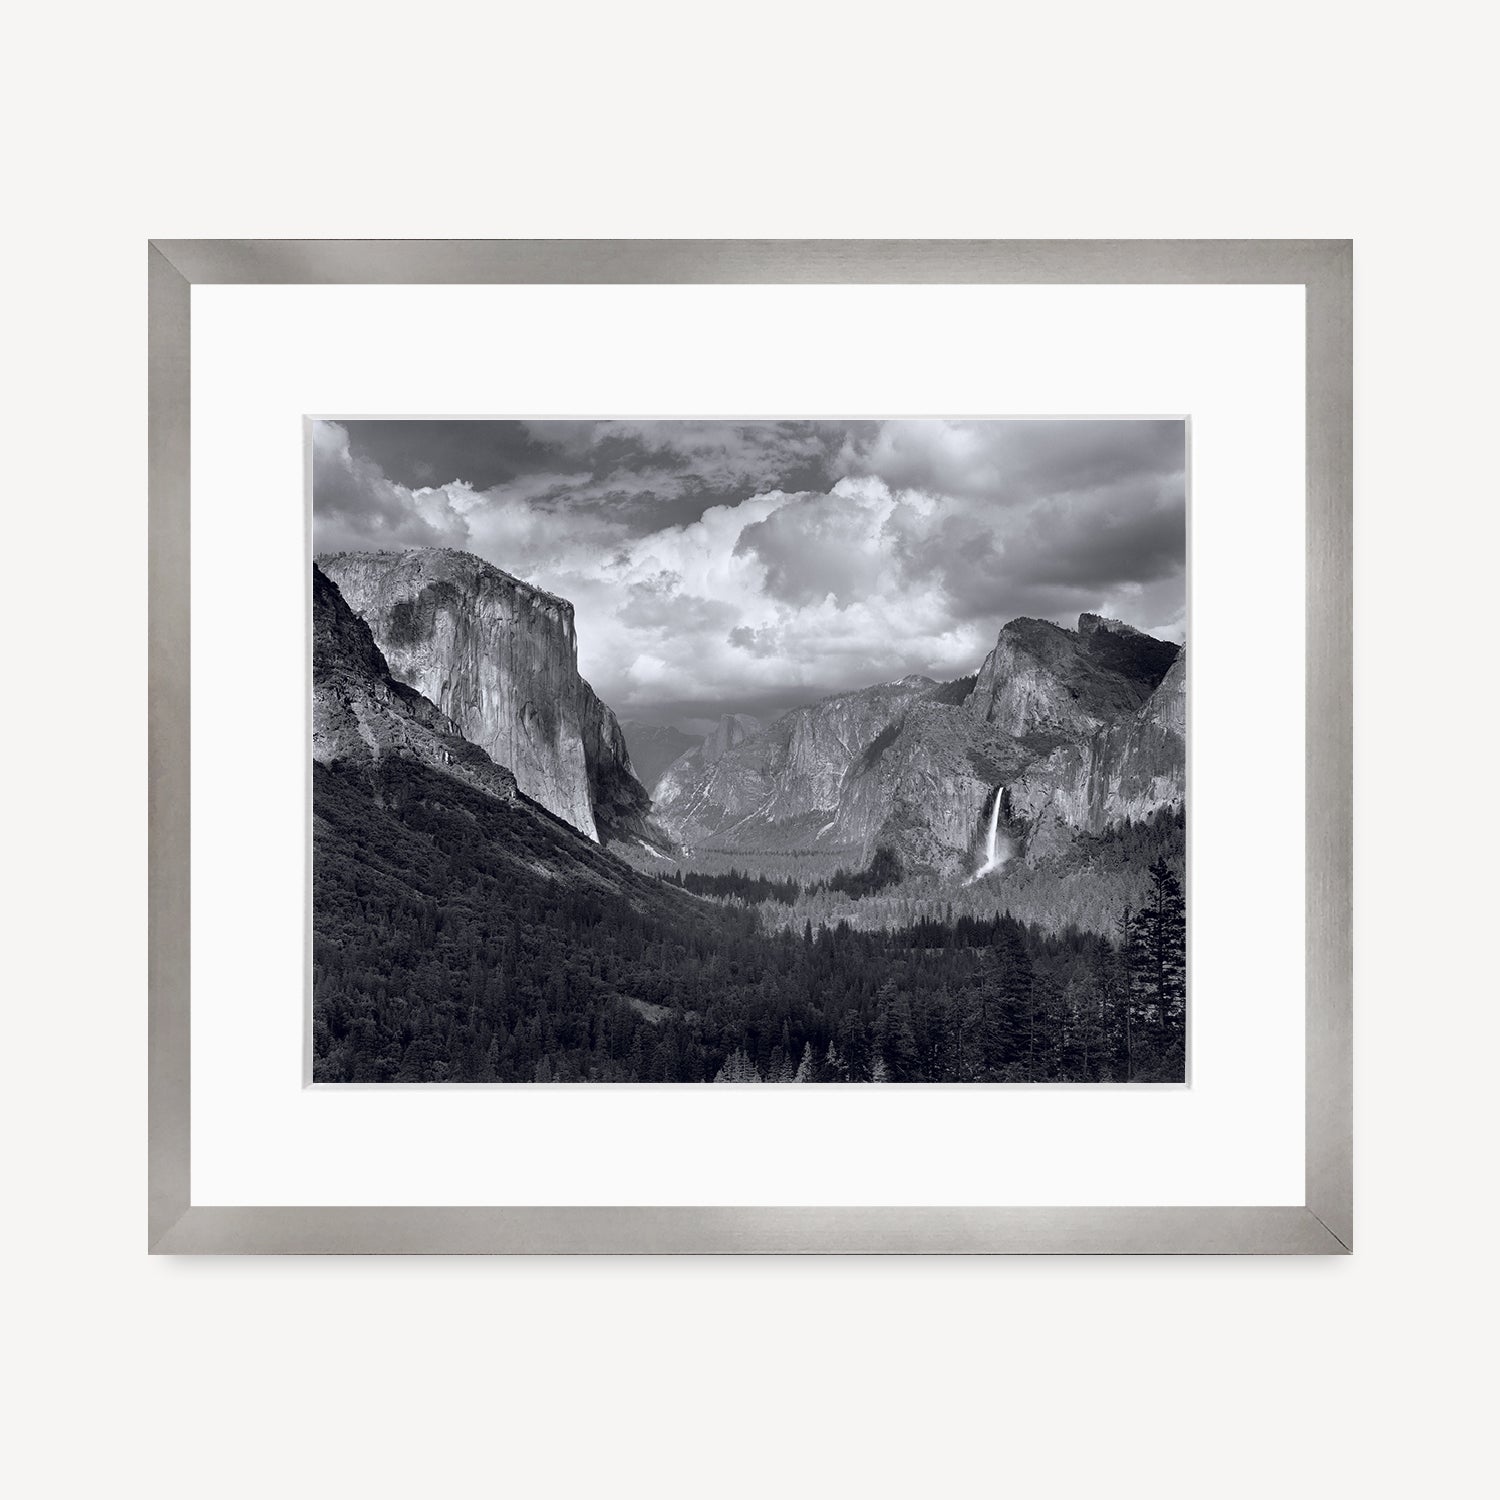 Yosemite Valley, Thunderstorm